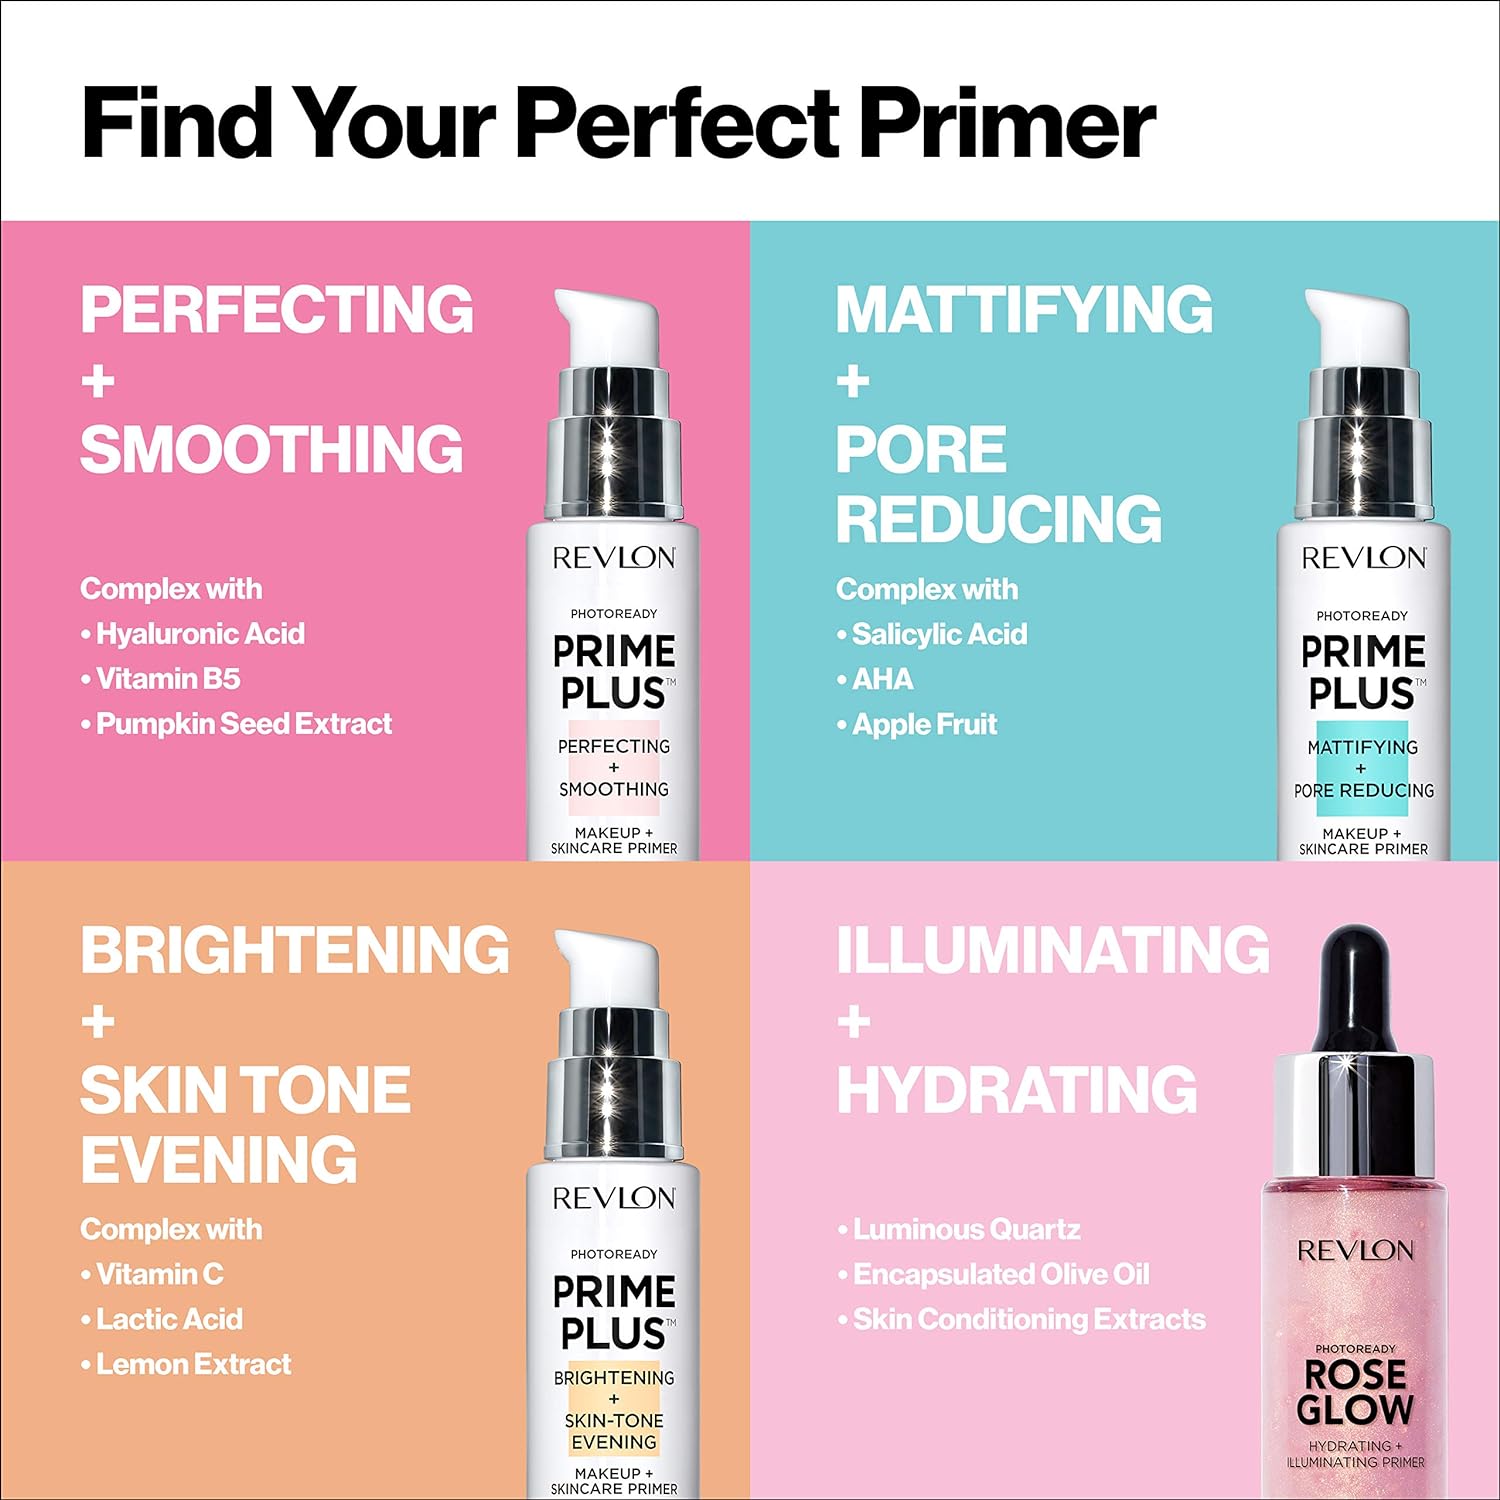  Revlon Prime Plus Makeup & Skincare Primer, Brightening and Skin-Tone Evening, Formulated with Vitamin C and Lactic Acid, 1 oz